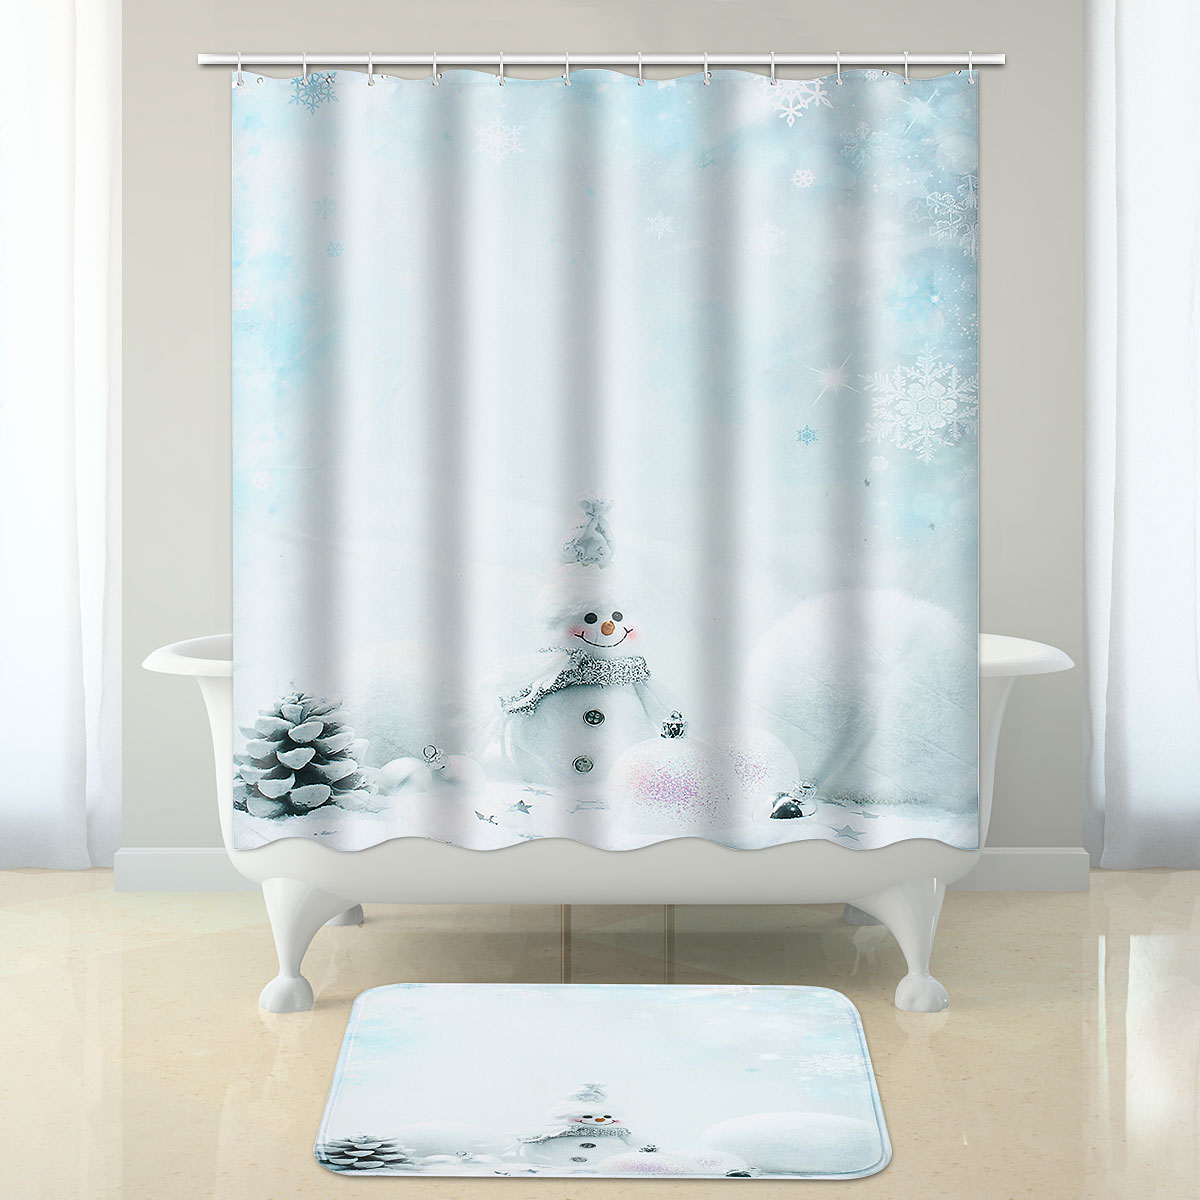 Bathroom-Set-Non-Slip-Rug-Lid-Toilet-Cover-Bathroom-Mat-Shower-Curtain-Snowman-1461471-1